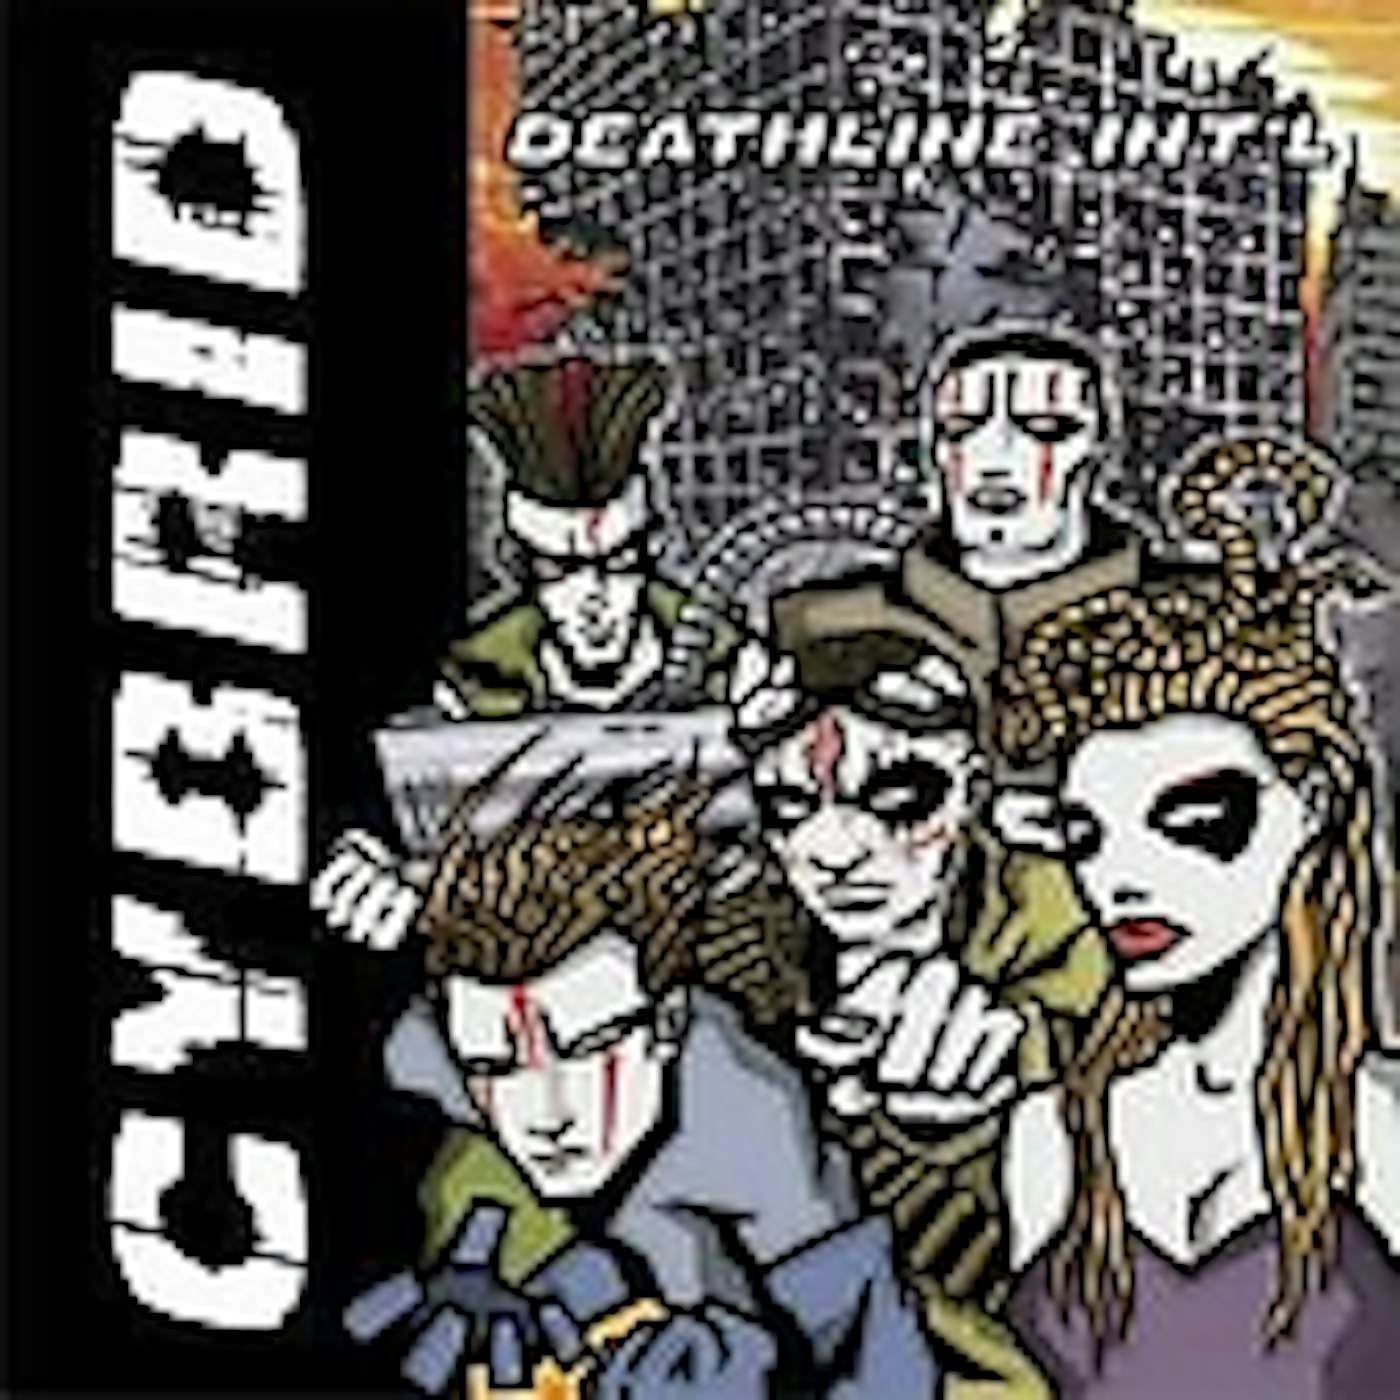 Deathline International CYBRID CD